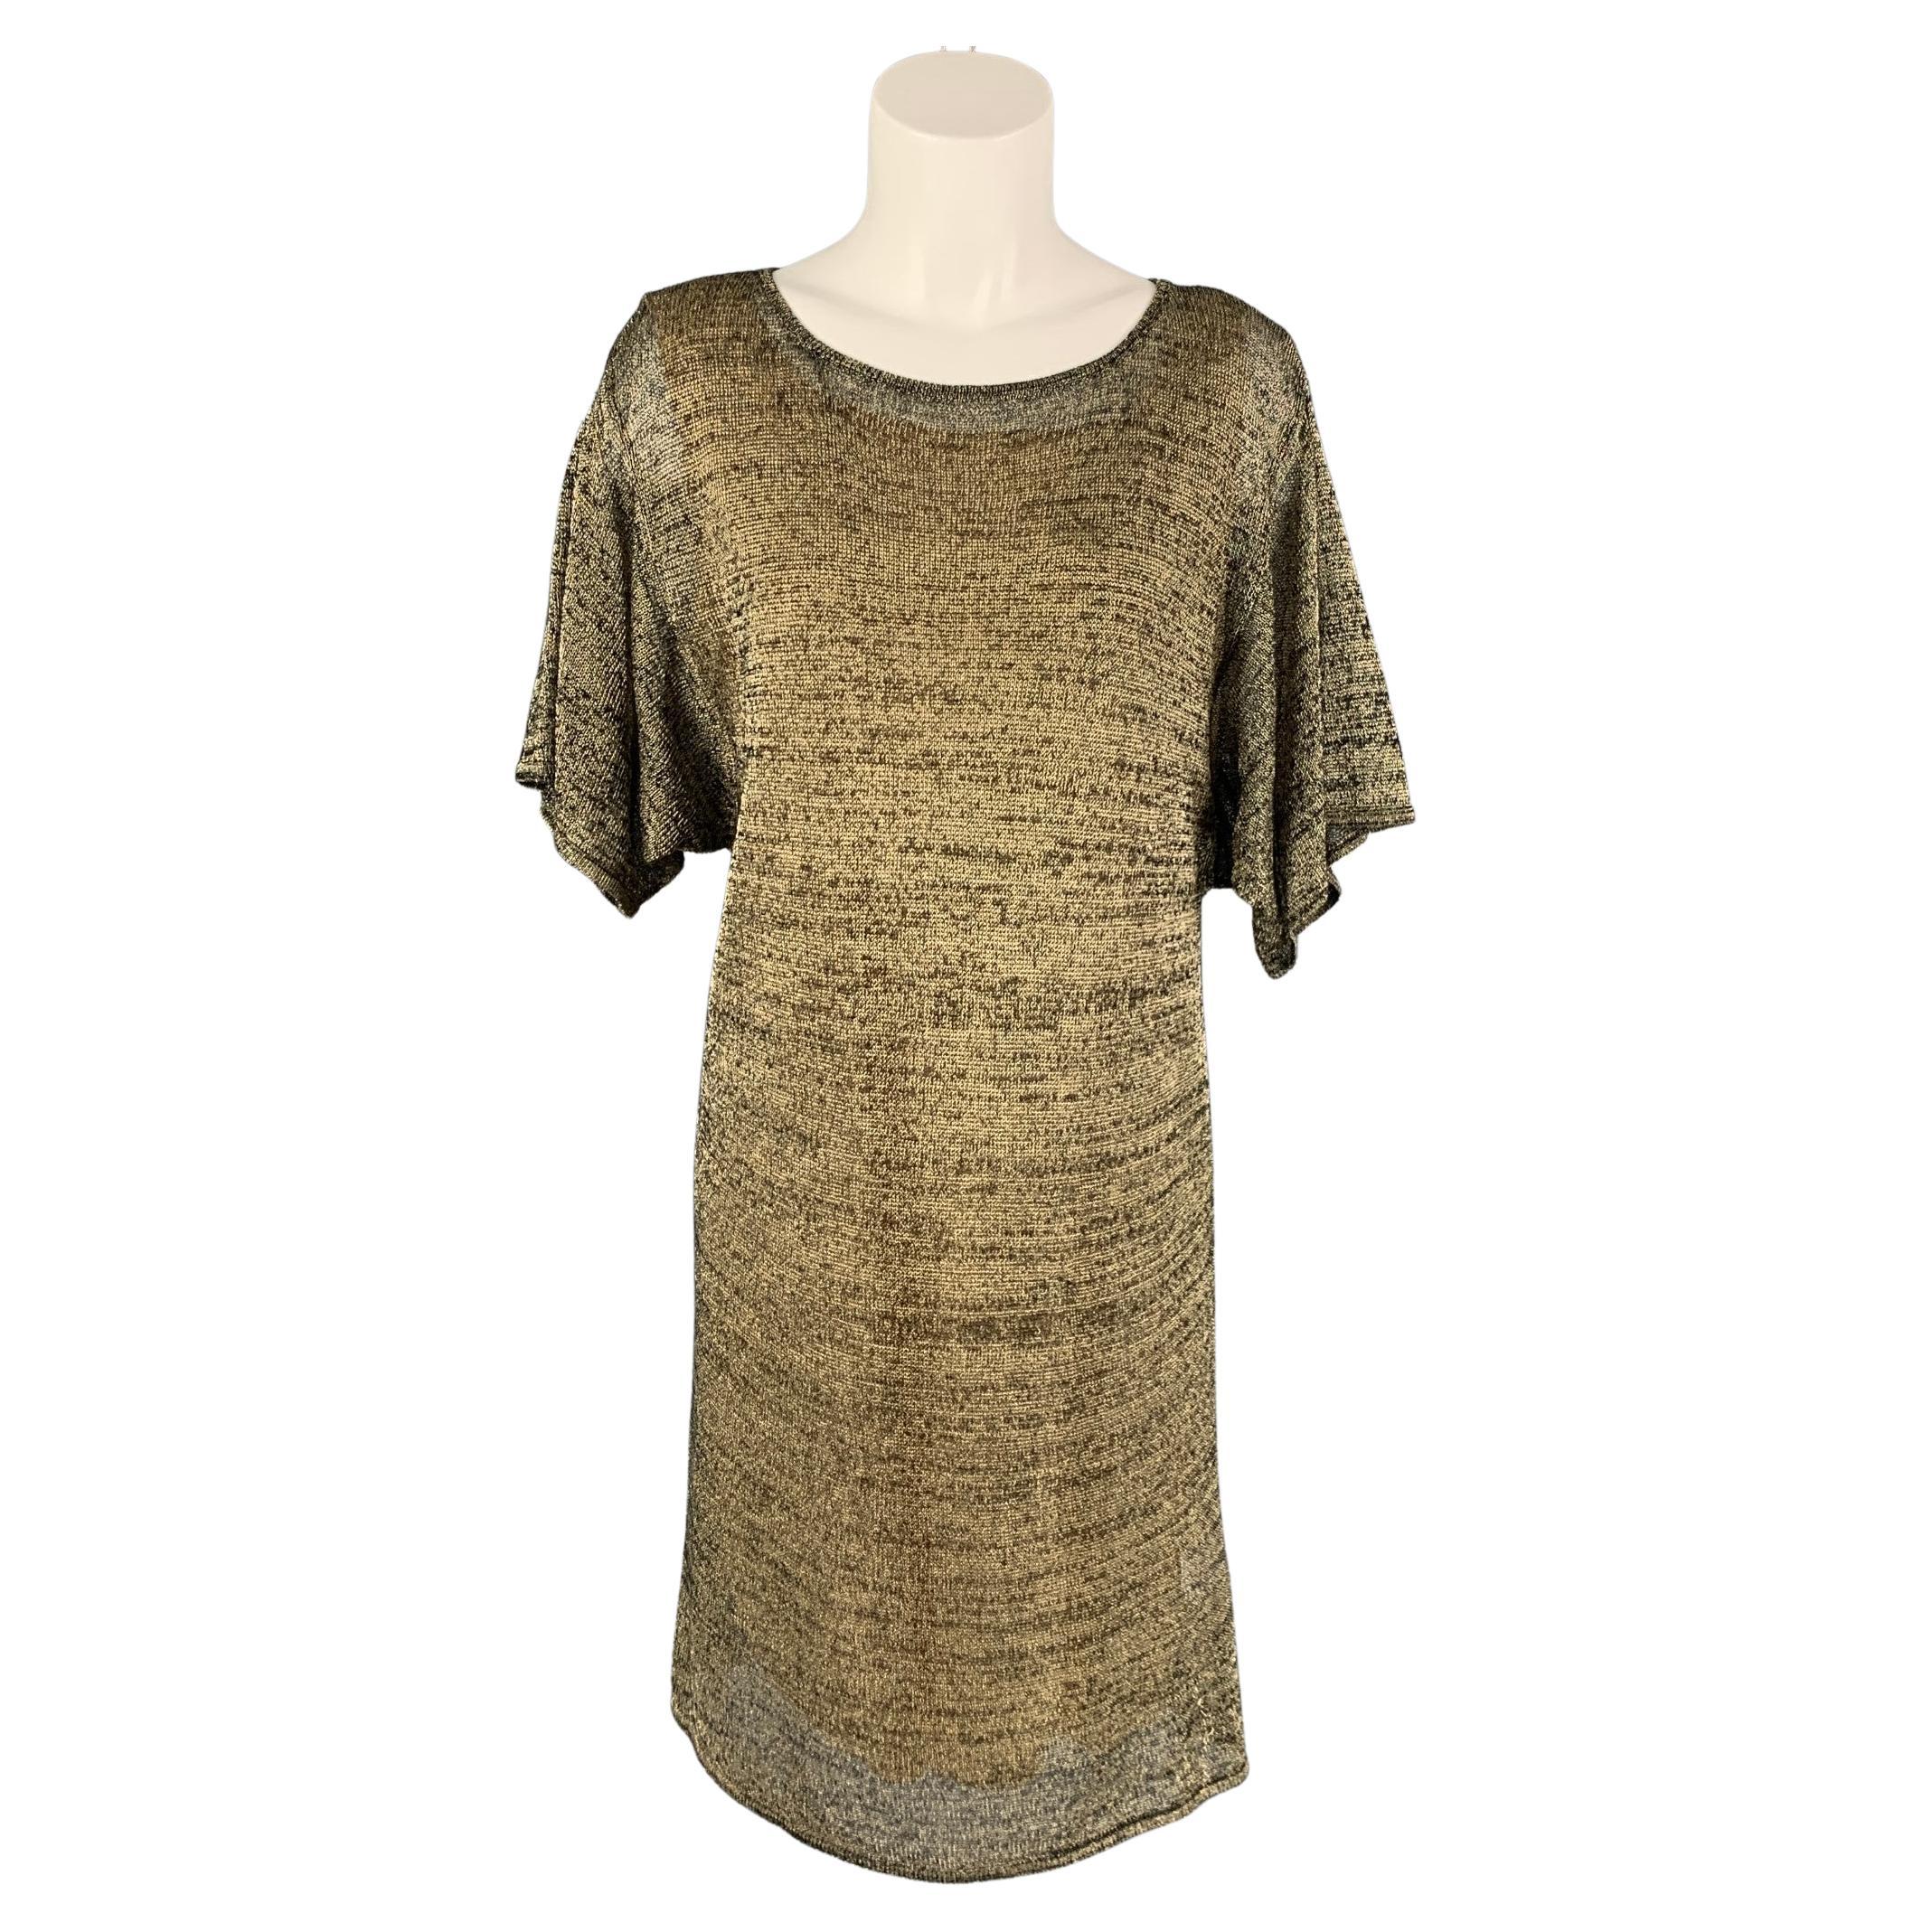 PORTS 1961 Size L Gold Black Cotton Polyester Dress